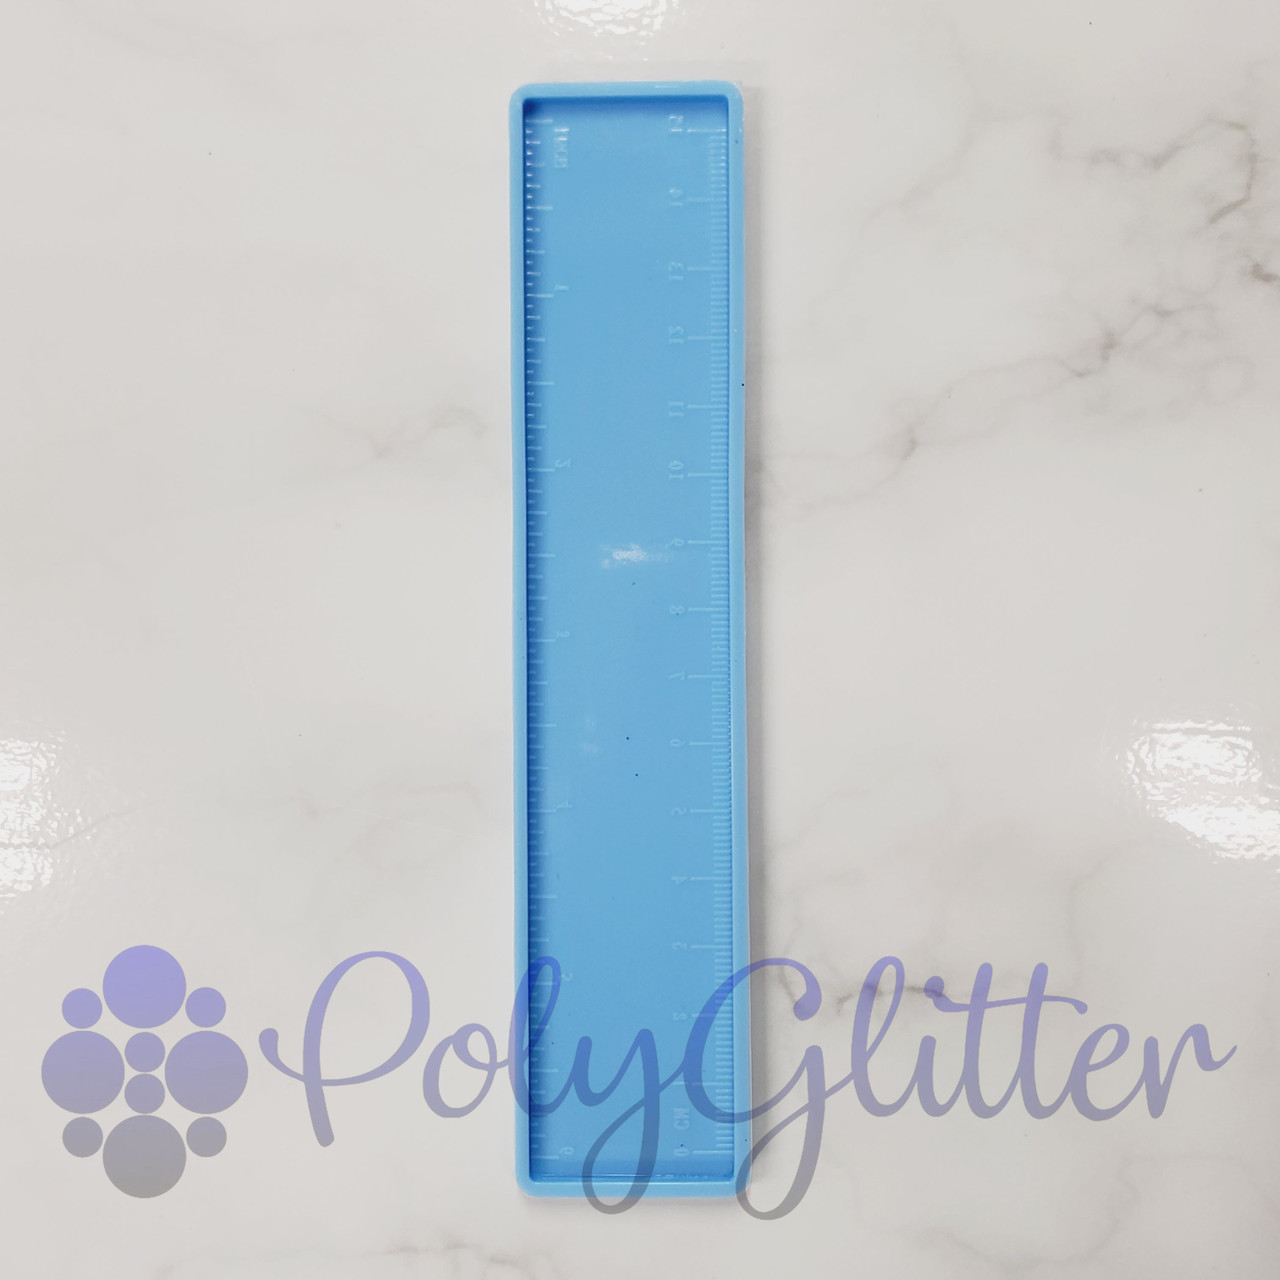 6 Inch Ruler Mold - PolyGlitter